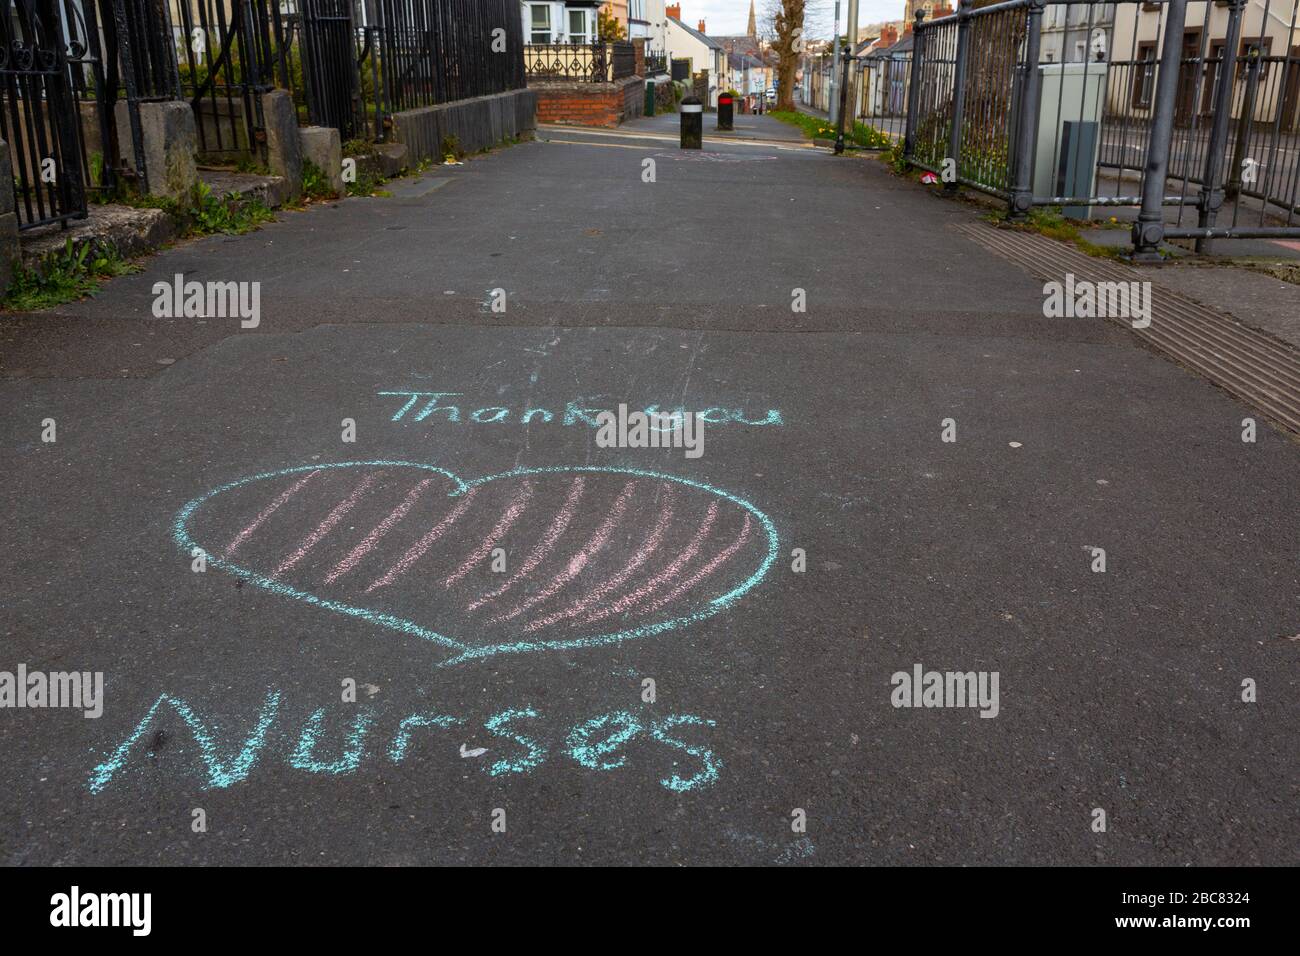 Carmarthen, UK. 3 April, 2020. Child's chalk graffiti on pavement saying Thank You Nurses as part of Clap for Carers initiative during Coronavirus pandemic lockdown in Wales, UK. Credit: Gruffydd Ll. Thomas/Alamy Live News Stock Photo